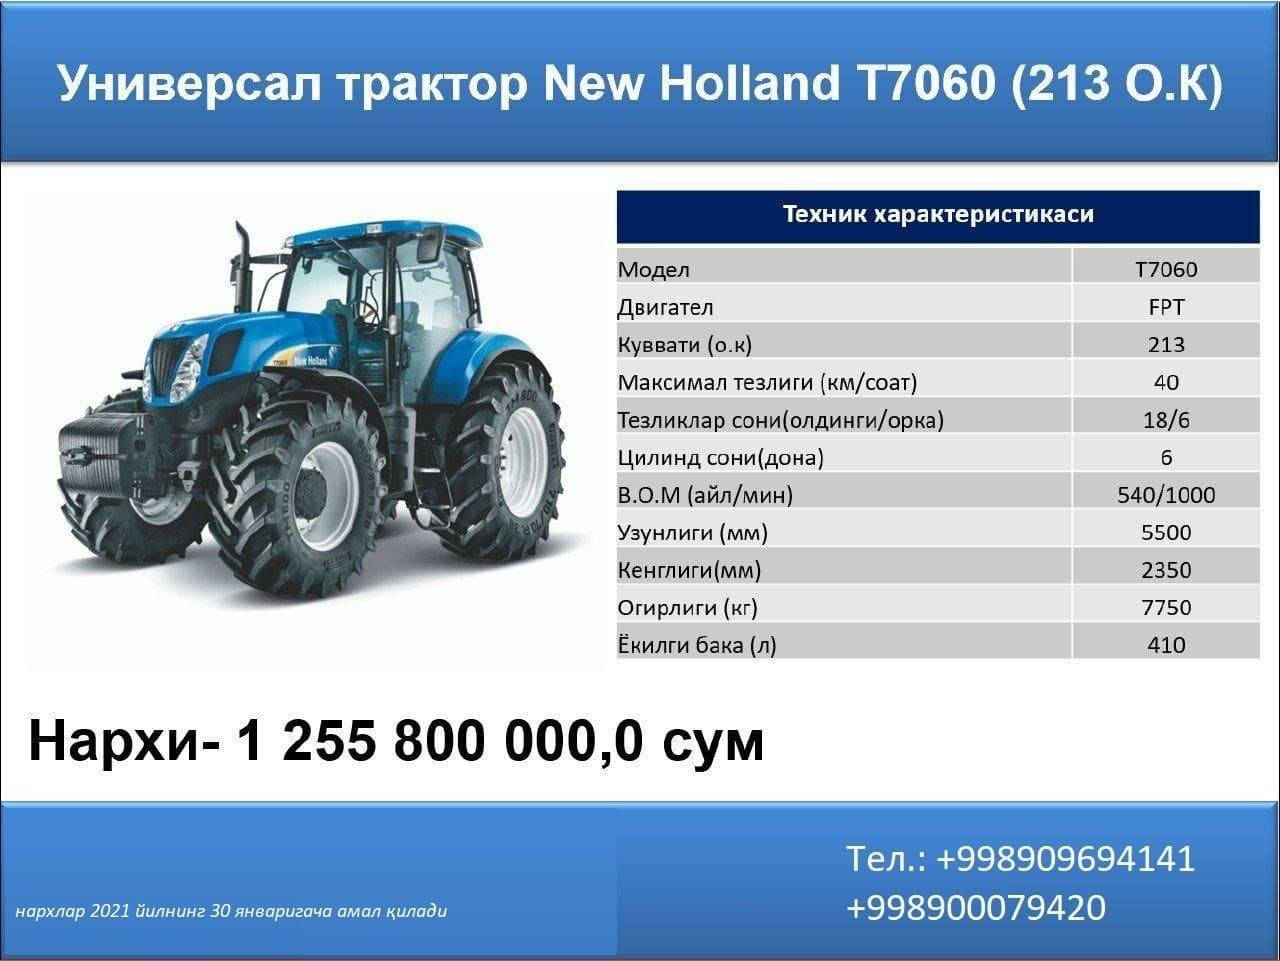 Трактора нью холланд (new holland) — особенности, характеристики